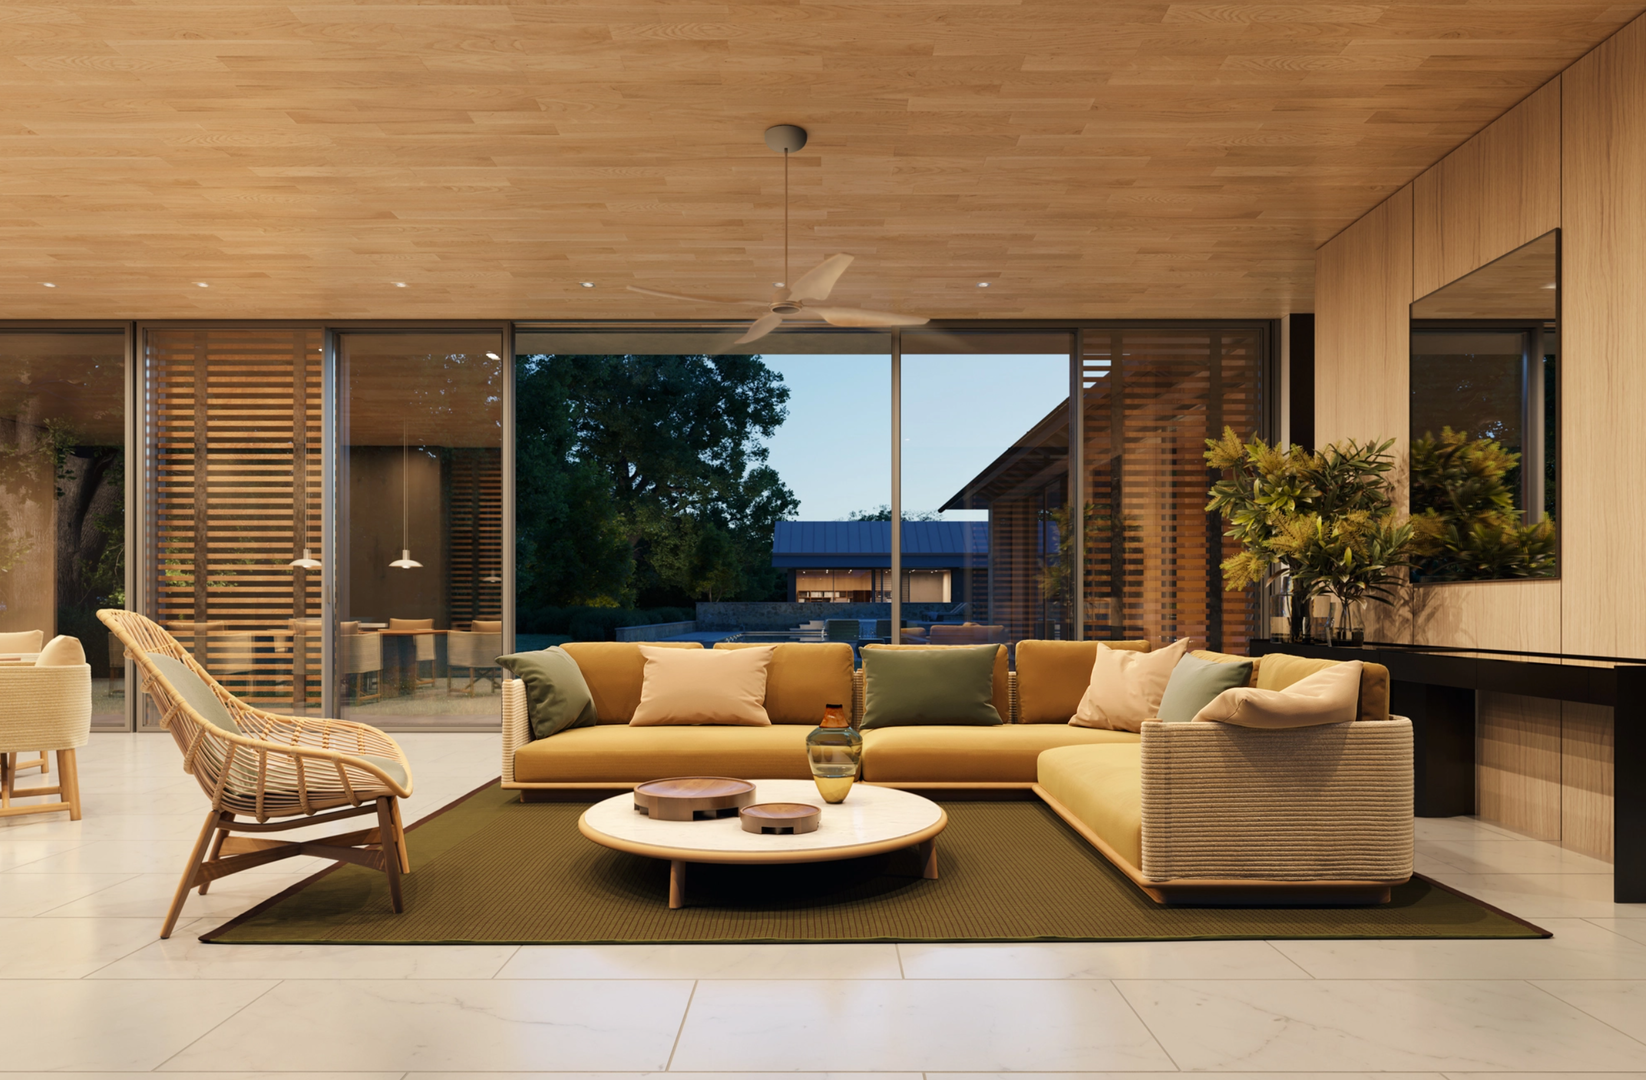 Kettal Giro center sofa module element modulaire bank outdoor HORA Barneveld 4 (7).png